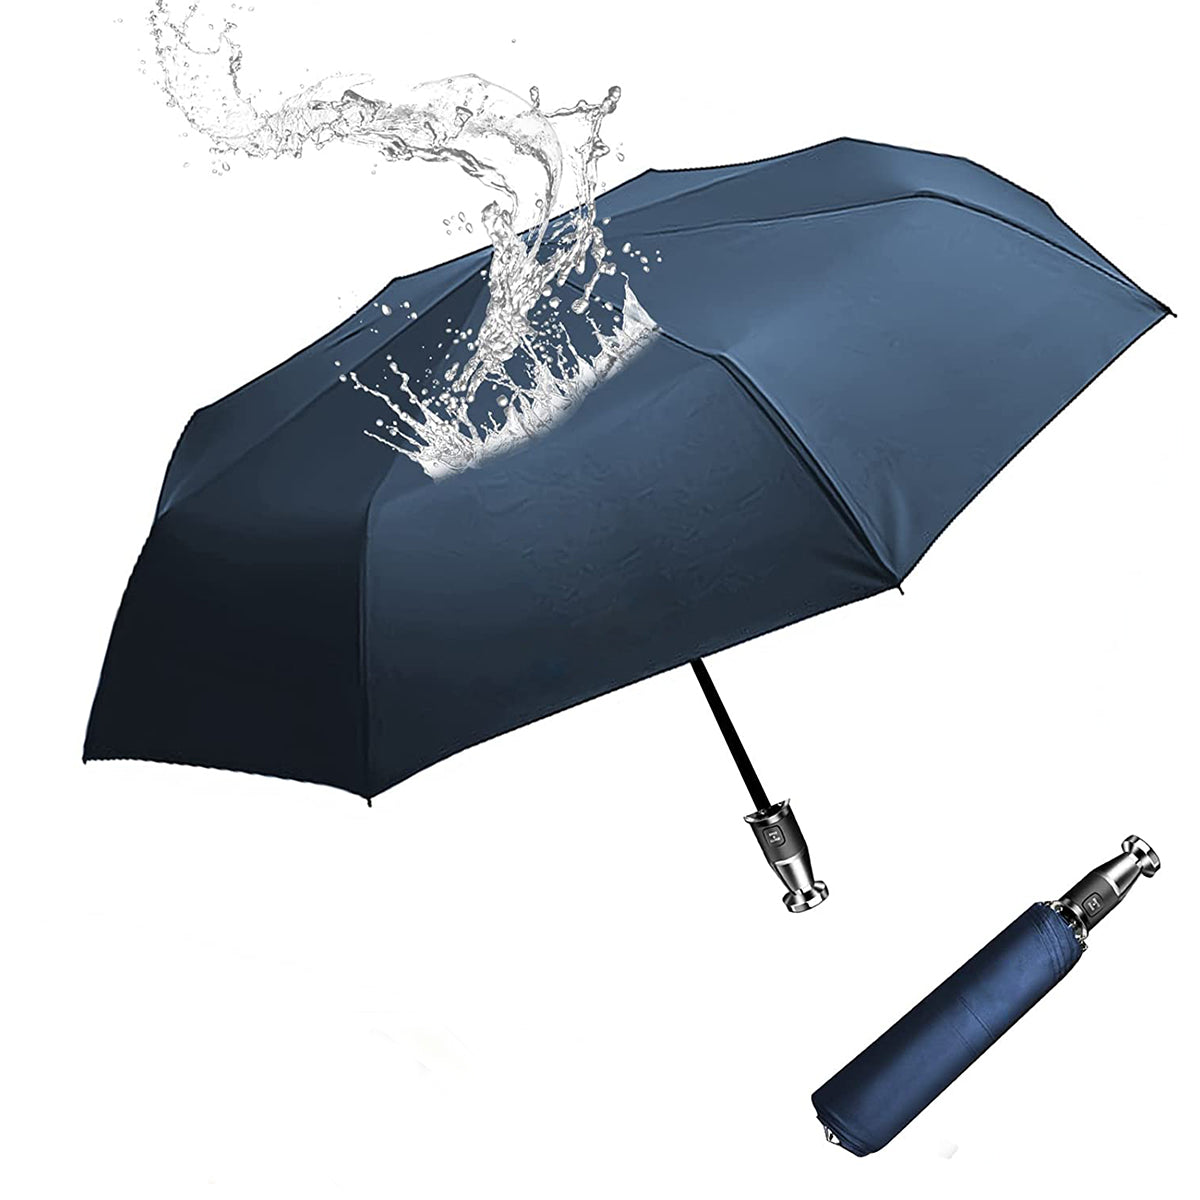 Umbrella for All Cars, 10 Ribs Umbrella Windproof Automatic Folding Umbrella, One-handed use, Rain and Sun Protection, Car Accessories LM13993